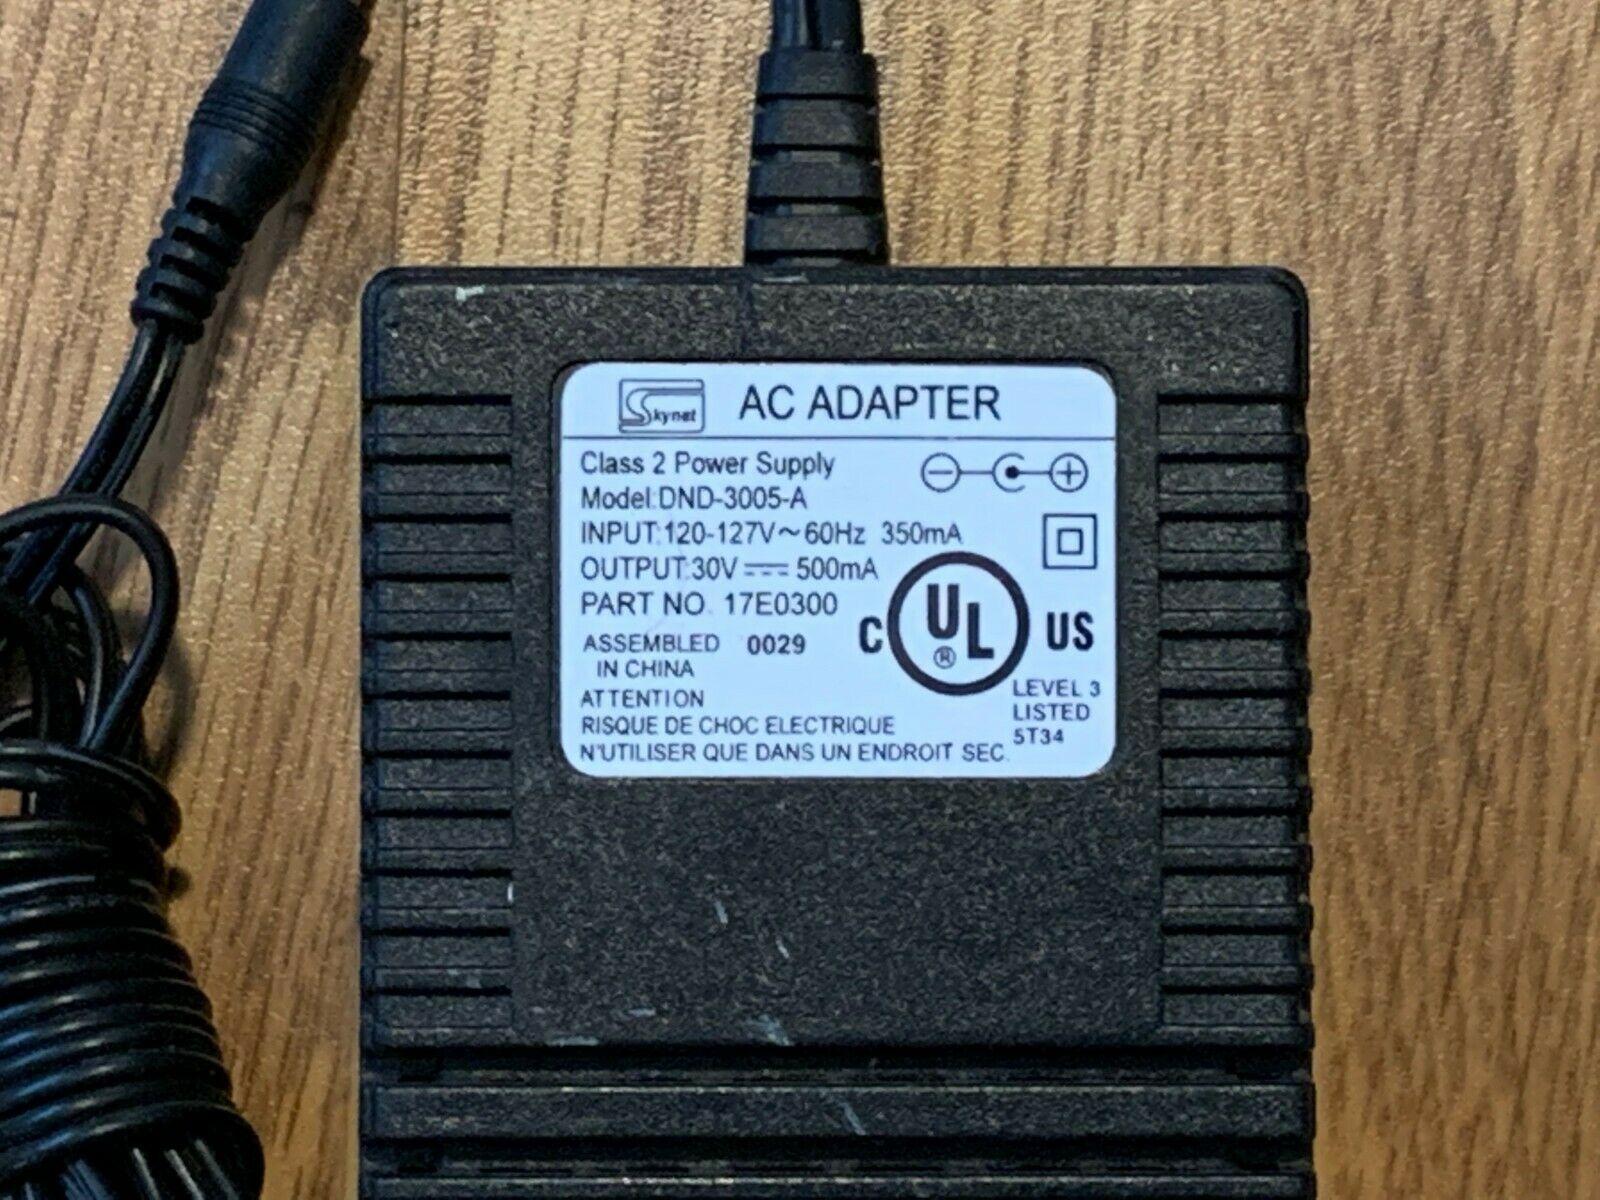 Skynet AC Adapter Class 2 Power Supply DND-3005-A 17E0300 Output: 30V 500mA Type: AC/AC Adapter M - Click Image to Close